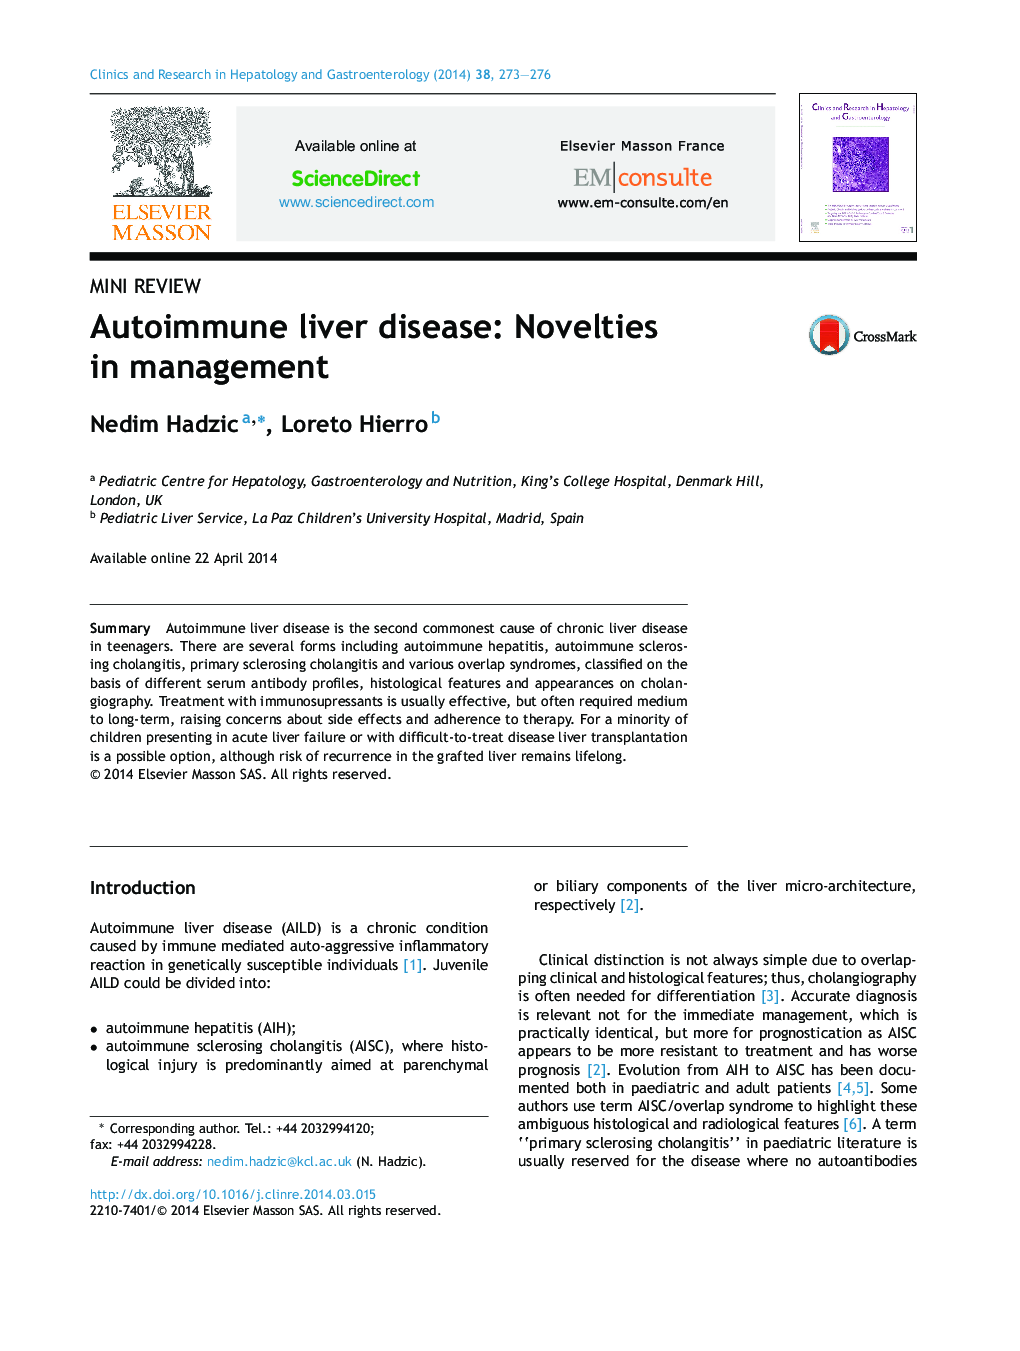 Autoimmune liver disease: Novelties in management